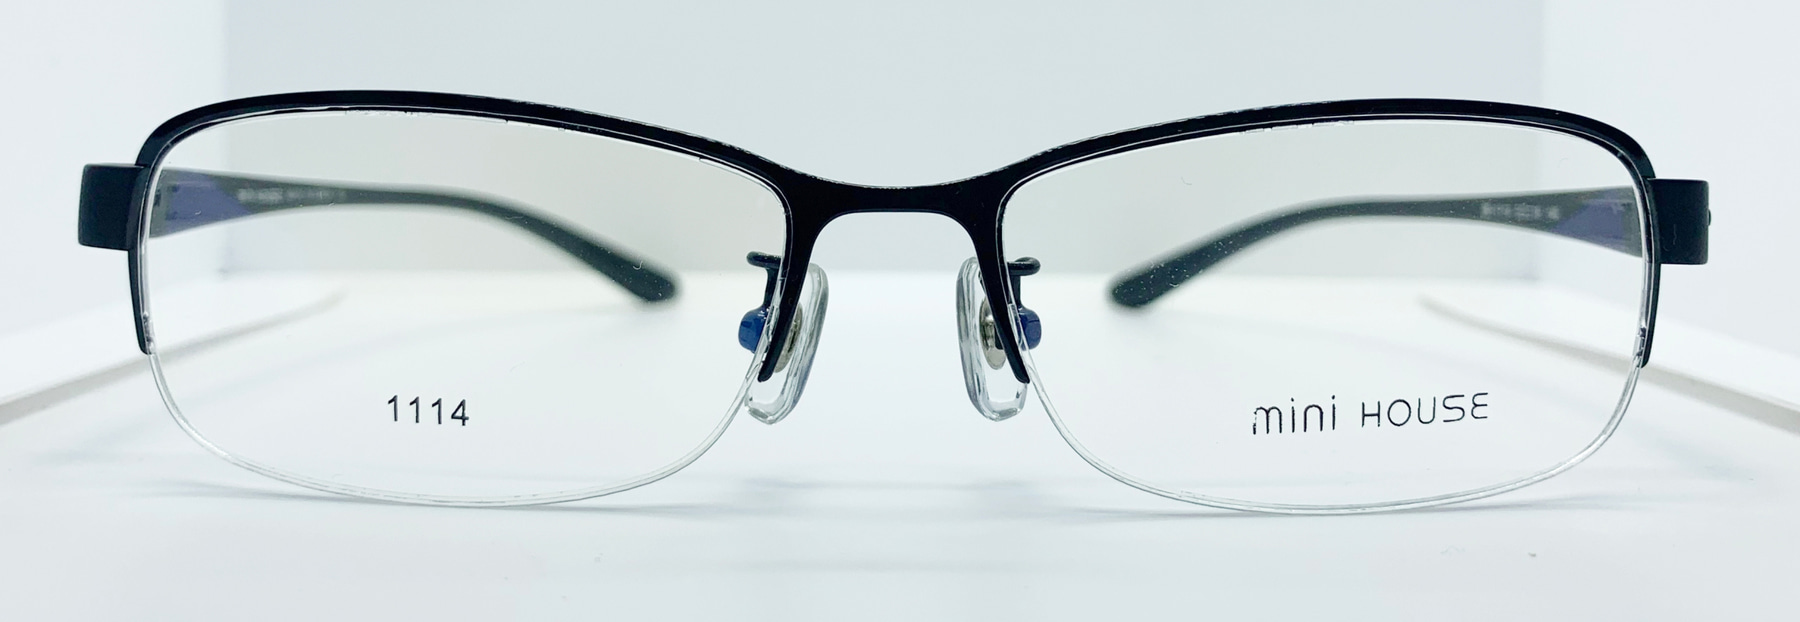 MINIHOUSE M-1114, Korean glasses, sunglasses, eyeglasses, glasses